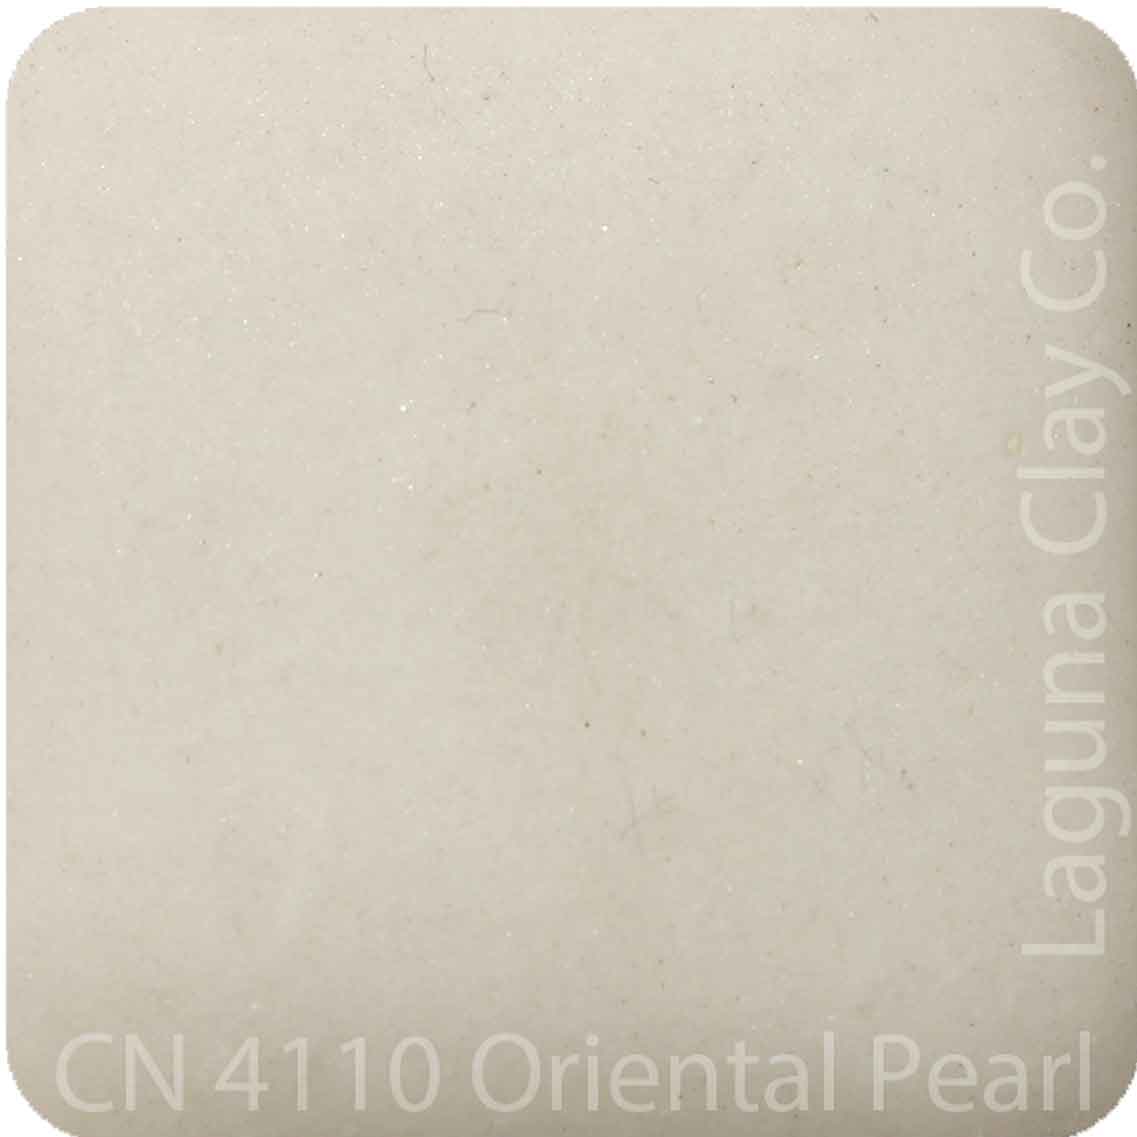 CN4110 Oriental Pearl Laguna Casting Clay, 22.68 kg Bag Dry